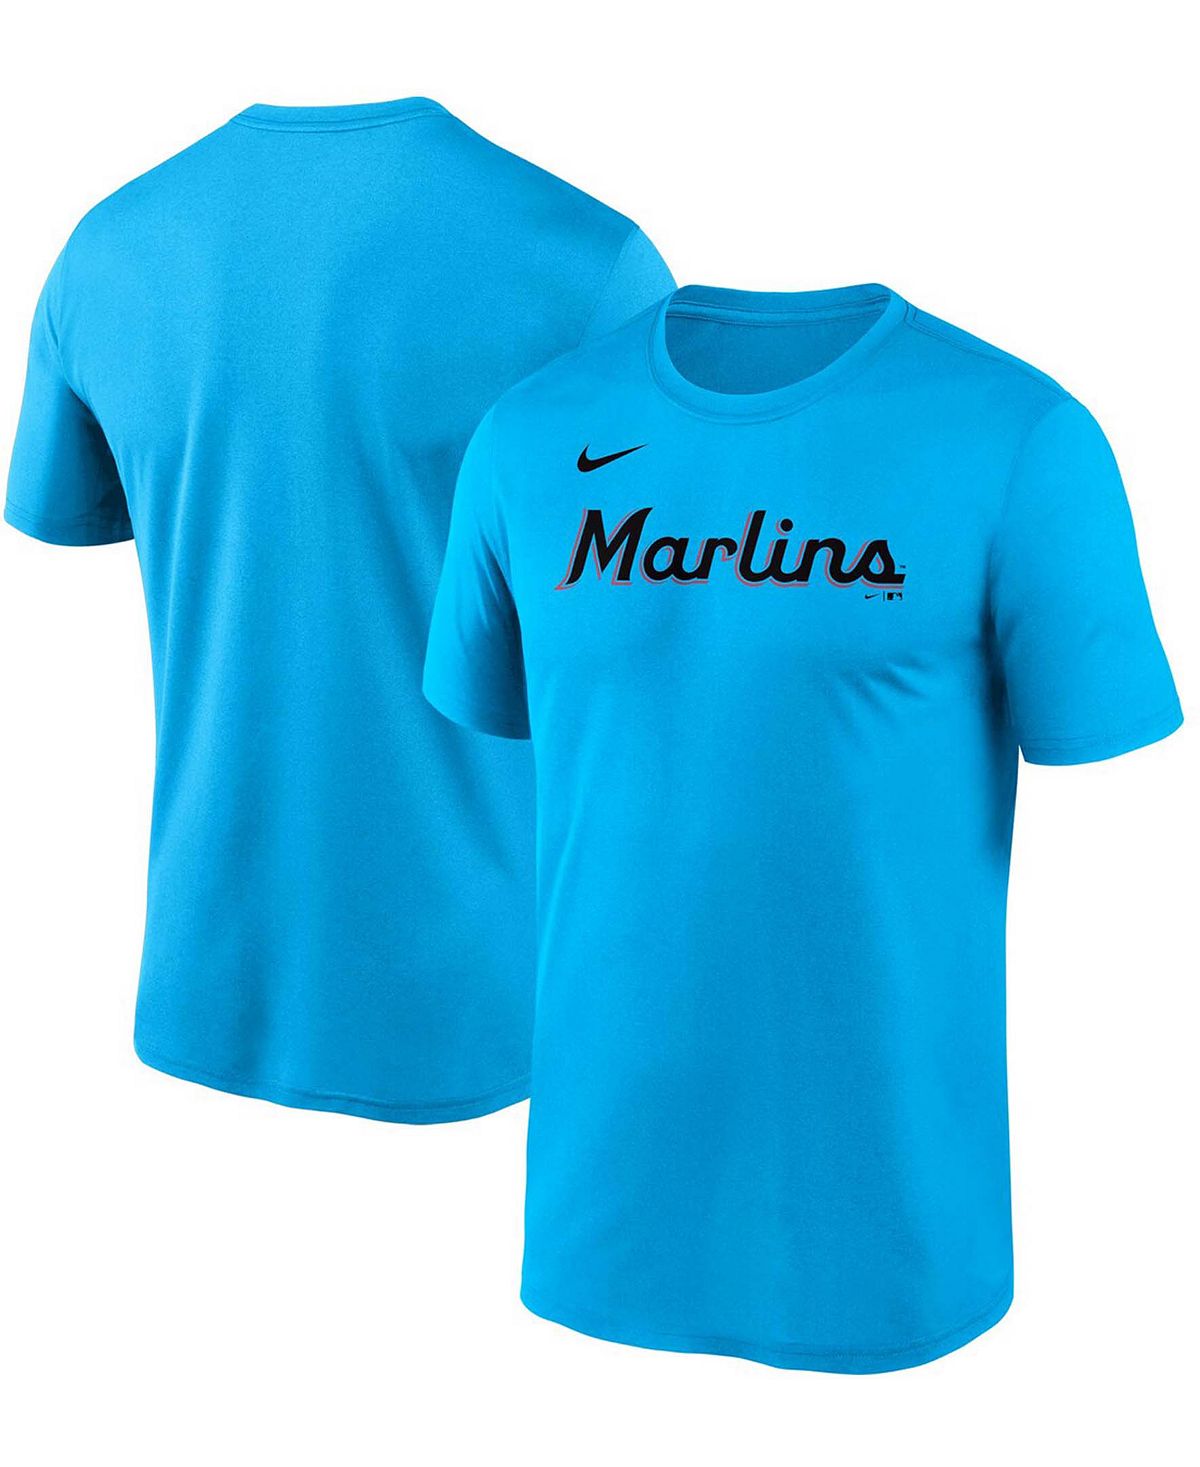 Мужская синяя футболка miami marlins wordmark legend Nike, синий